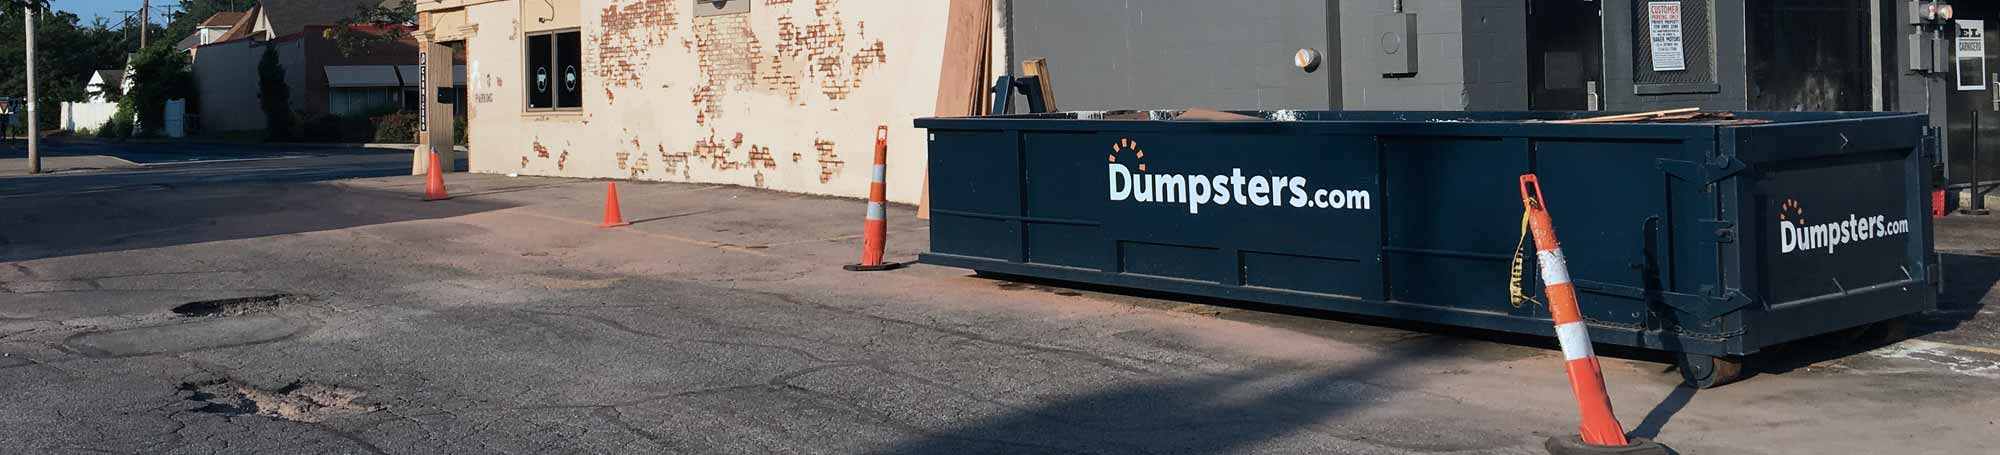 Roll Off Dumpster in Urban Parking Lot Near Orange Traffic Cones.